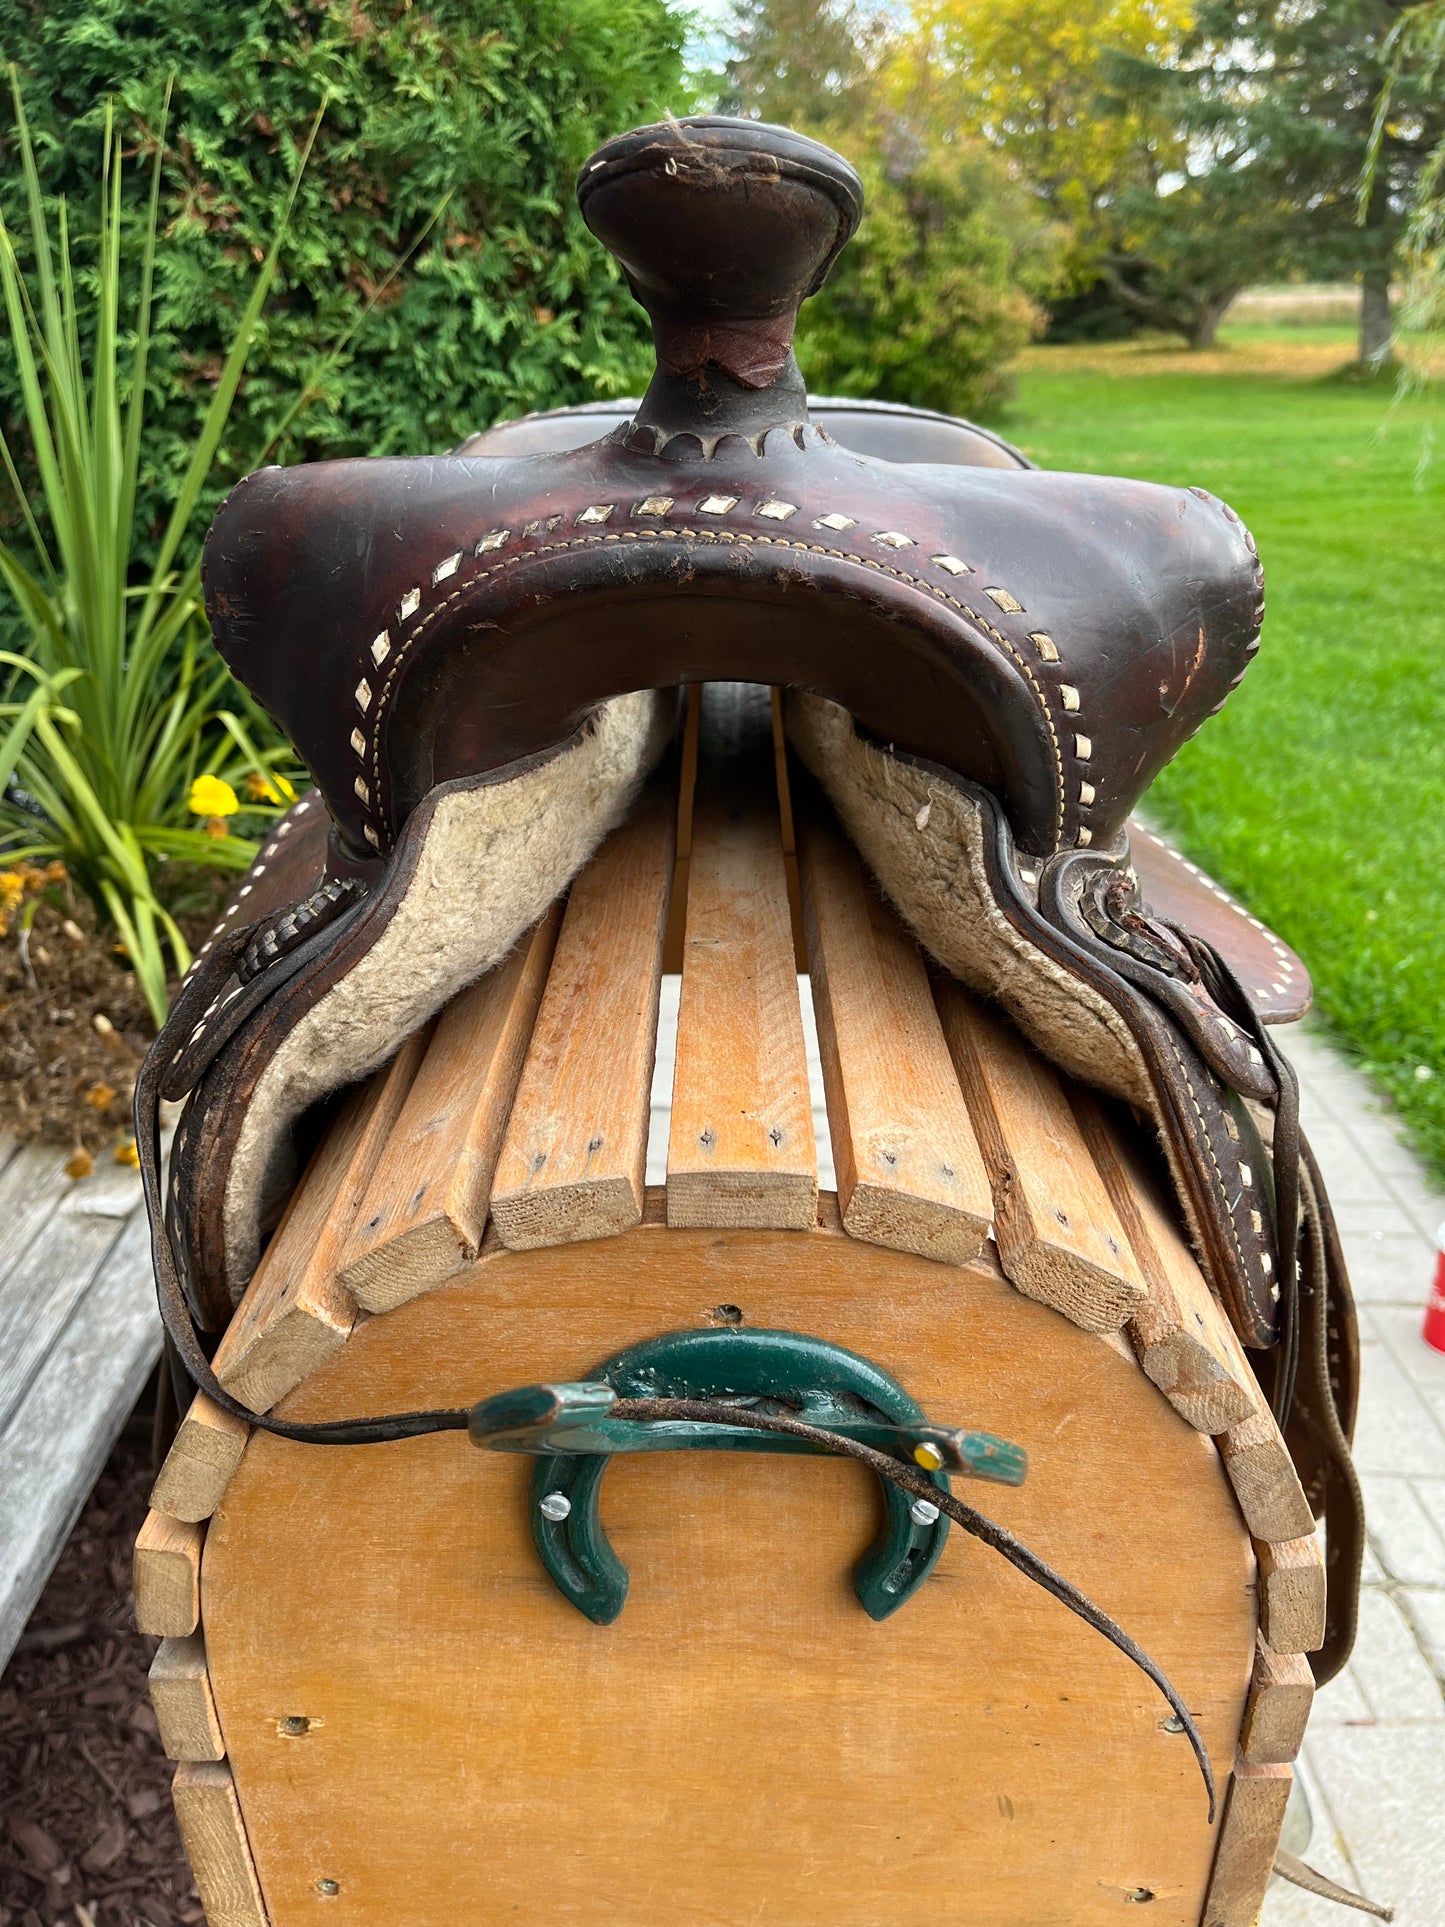 15” leather trail saddle